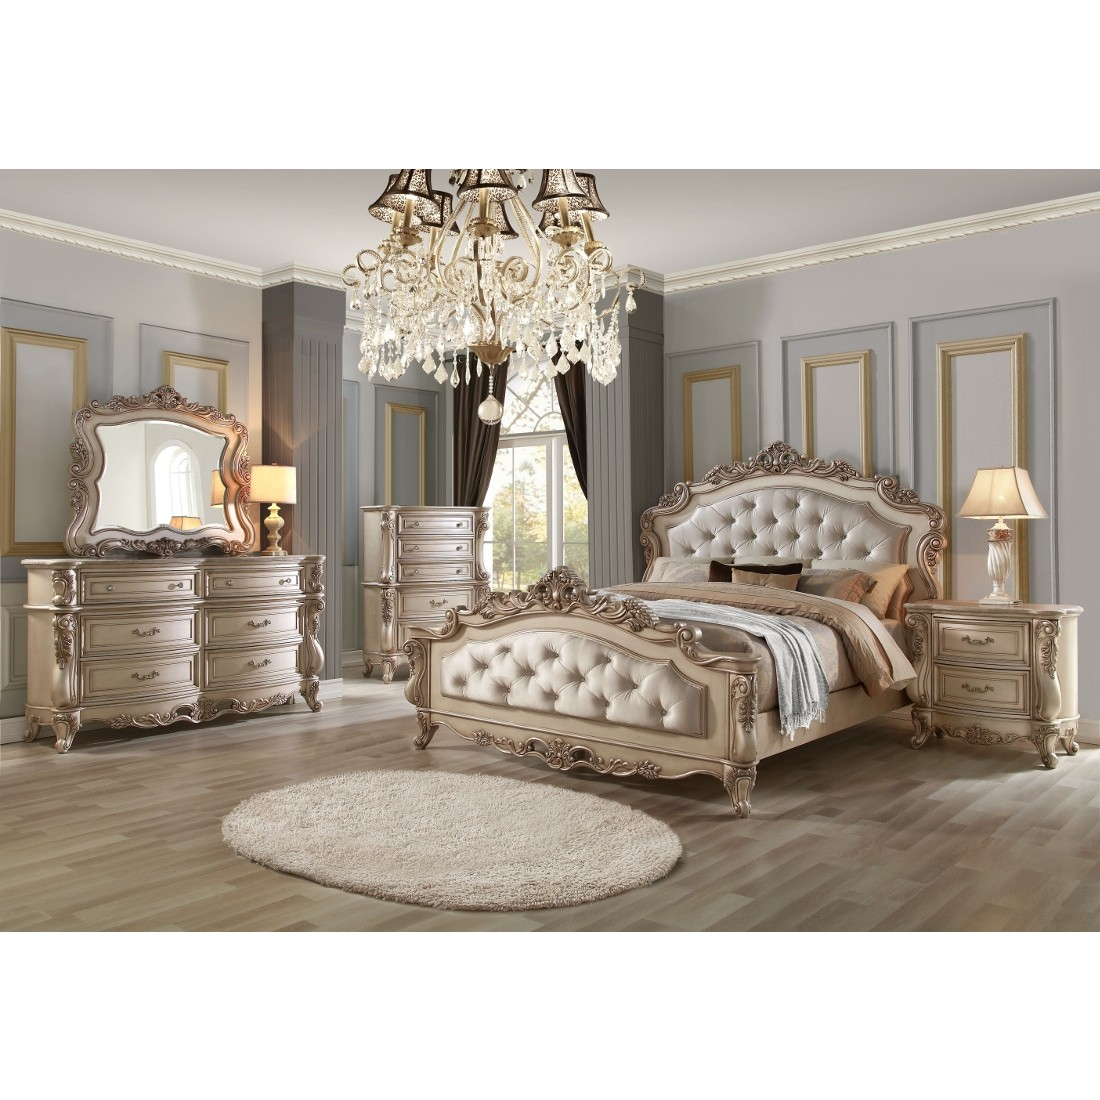 Acme Gorsedd 4pc Queen Bedroom Set Cream Fabric And Antique White pertaining to dimensions 1100 X 1100